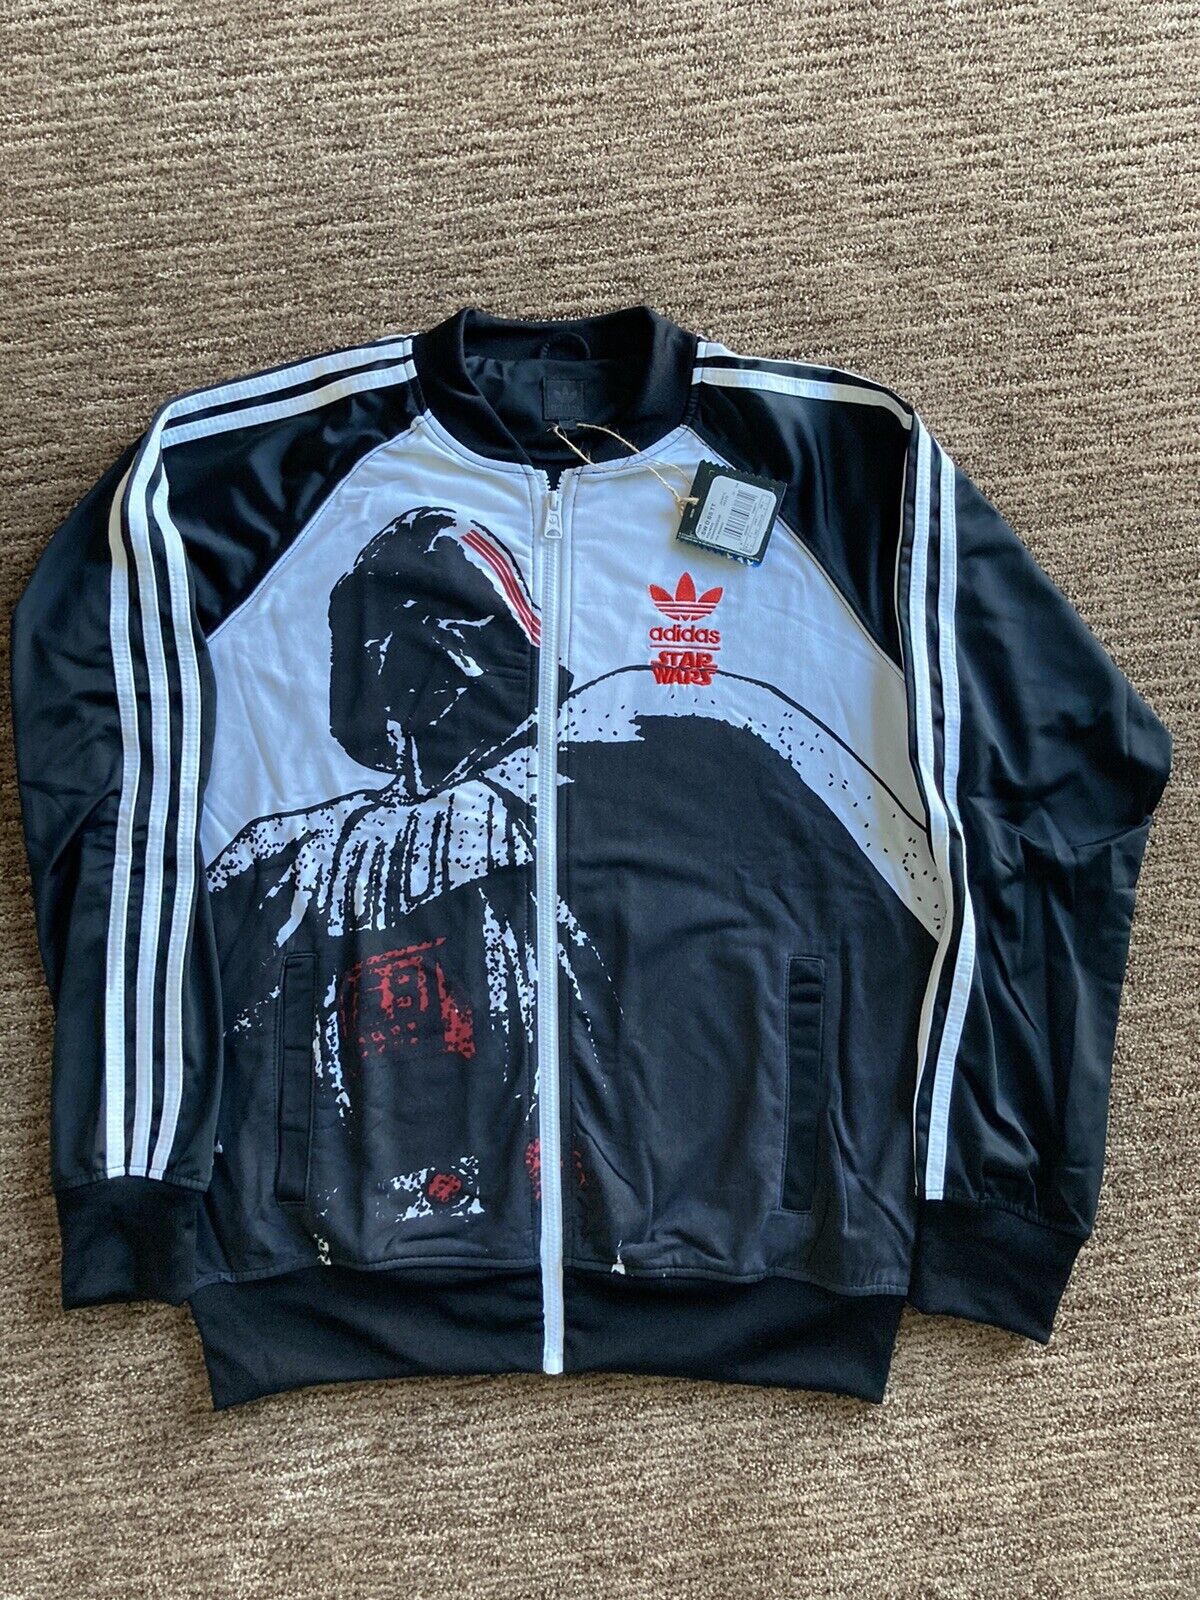 Adidas Star Wars/ Darth Vader Zip Track Jacket Size Large | eBay